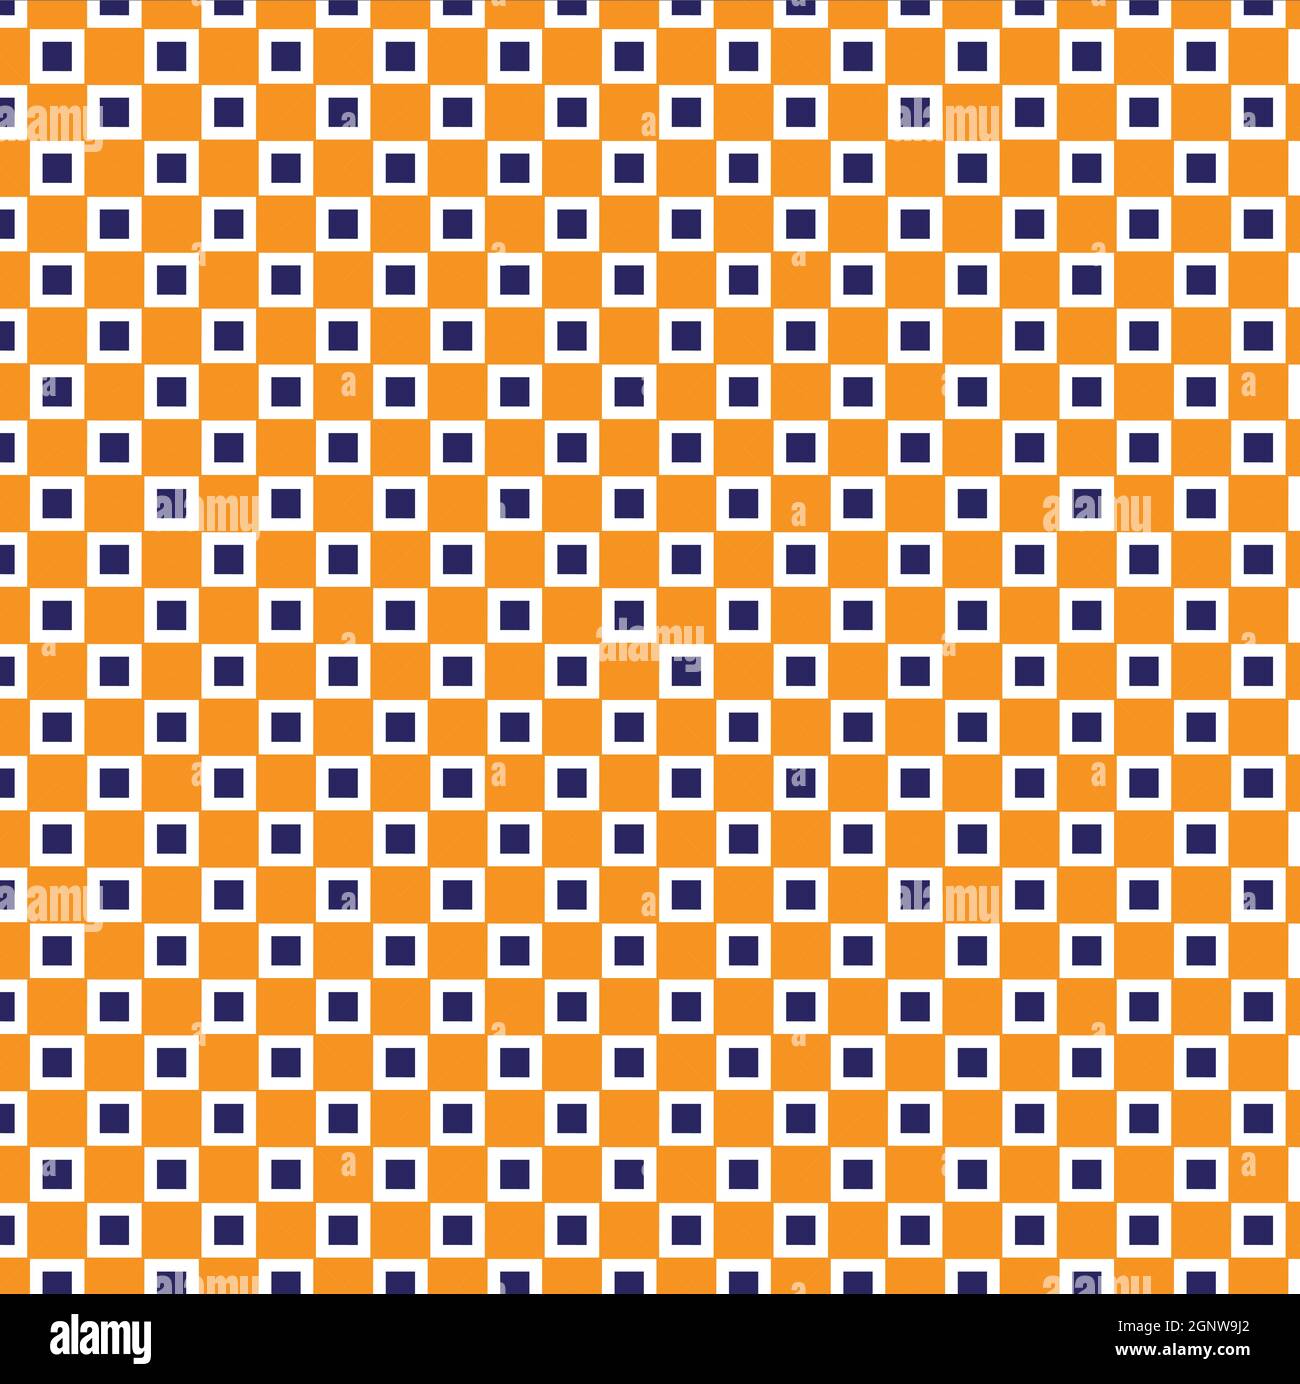 Seamless geometric rectangular pattern background Stock Vector